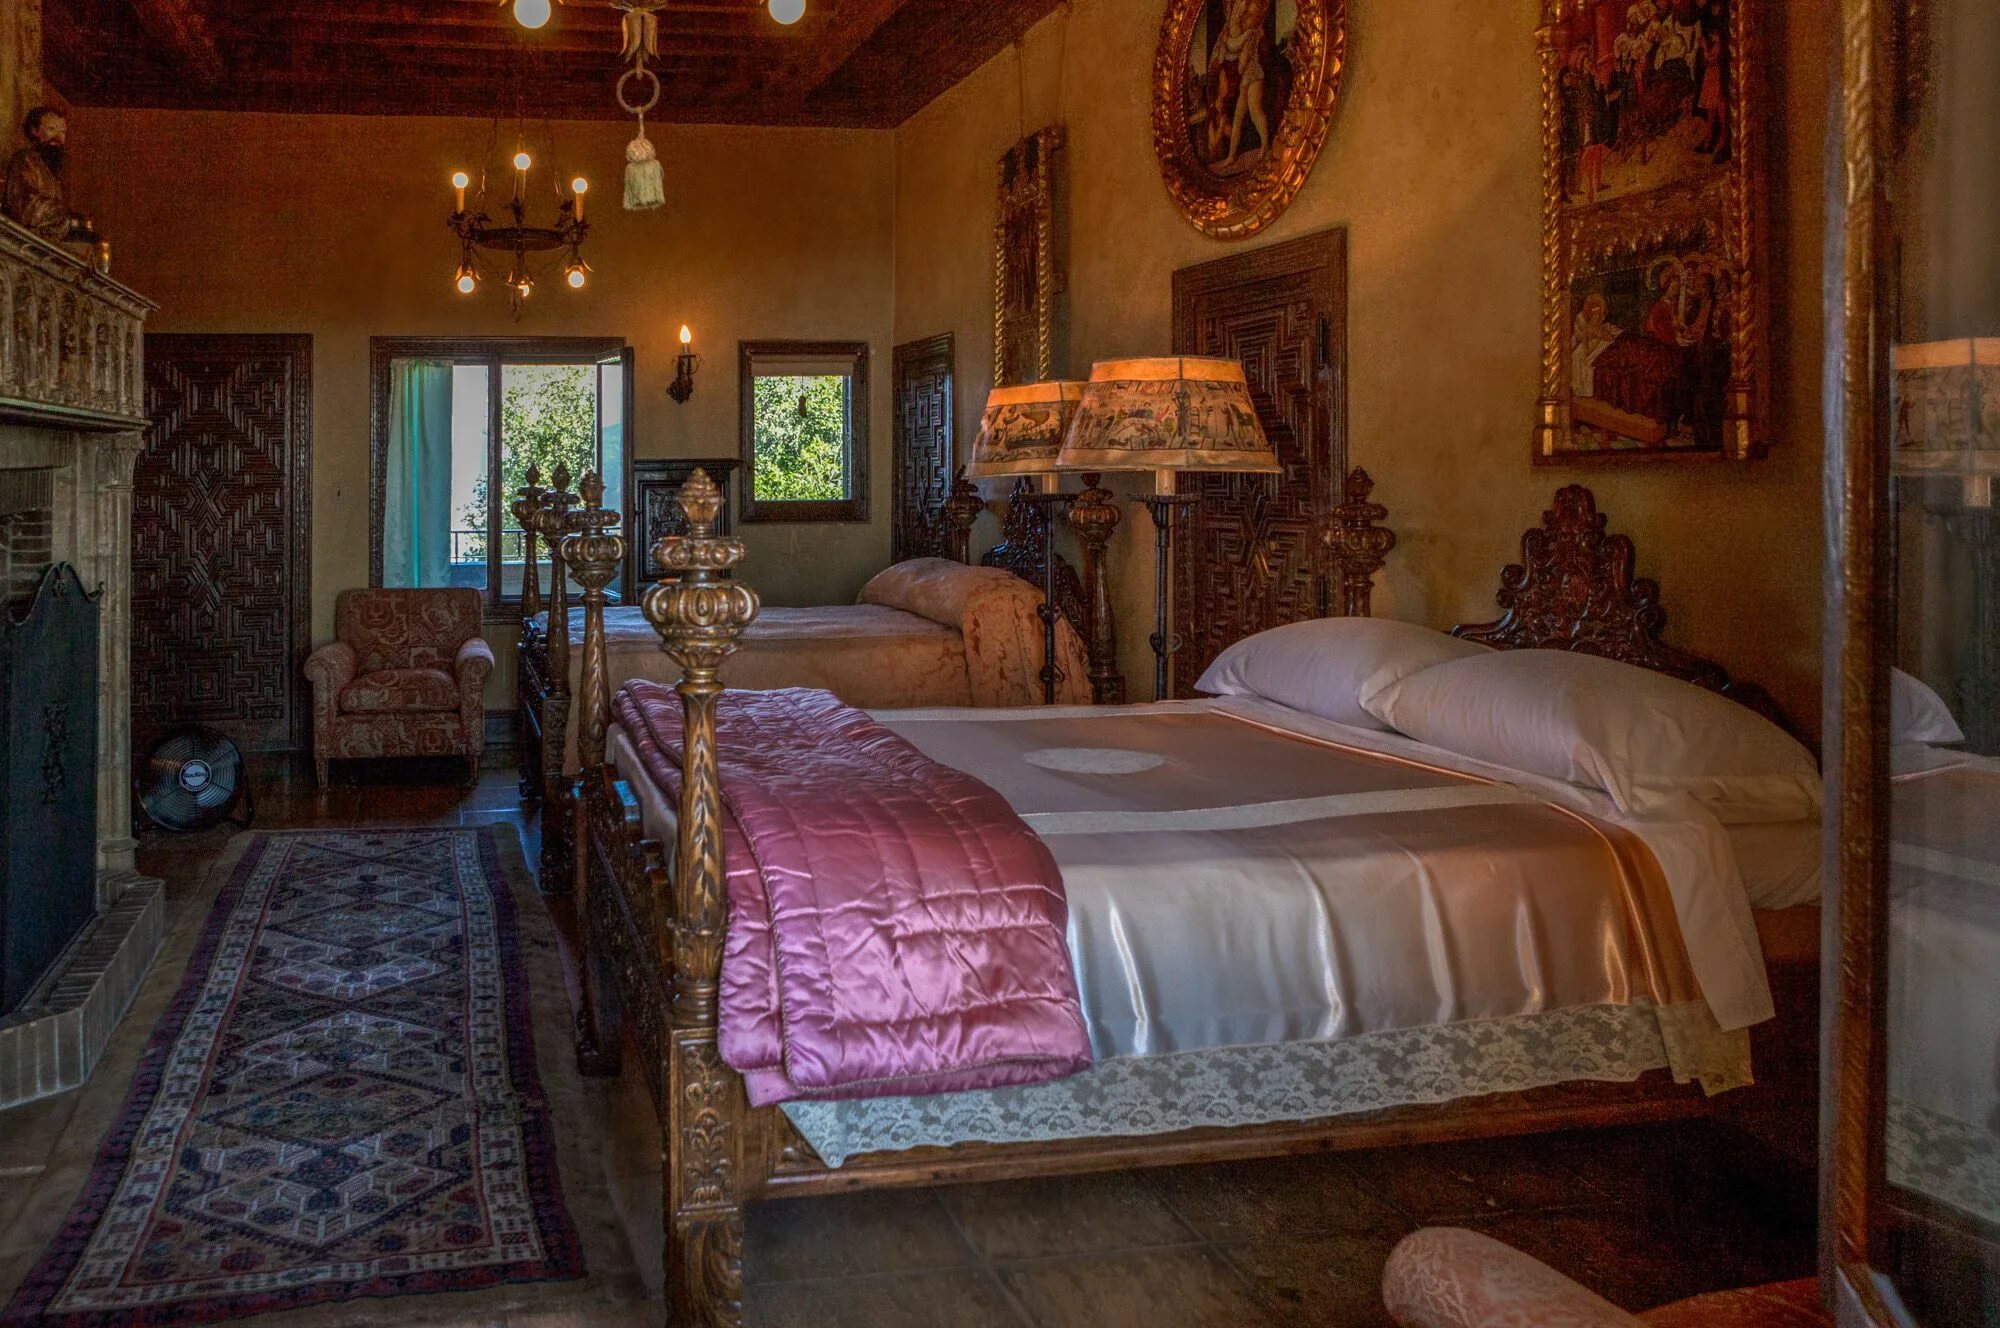 Old bedroom. Будуар Викторианская Готика интерьер. Hearst Castle спальни. Спальня в старинном стиле. Спальня в стиле замка.